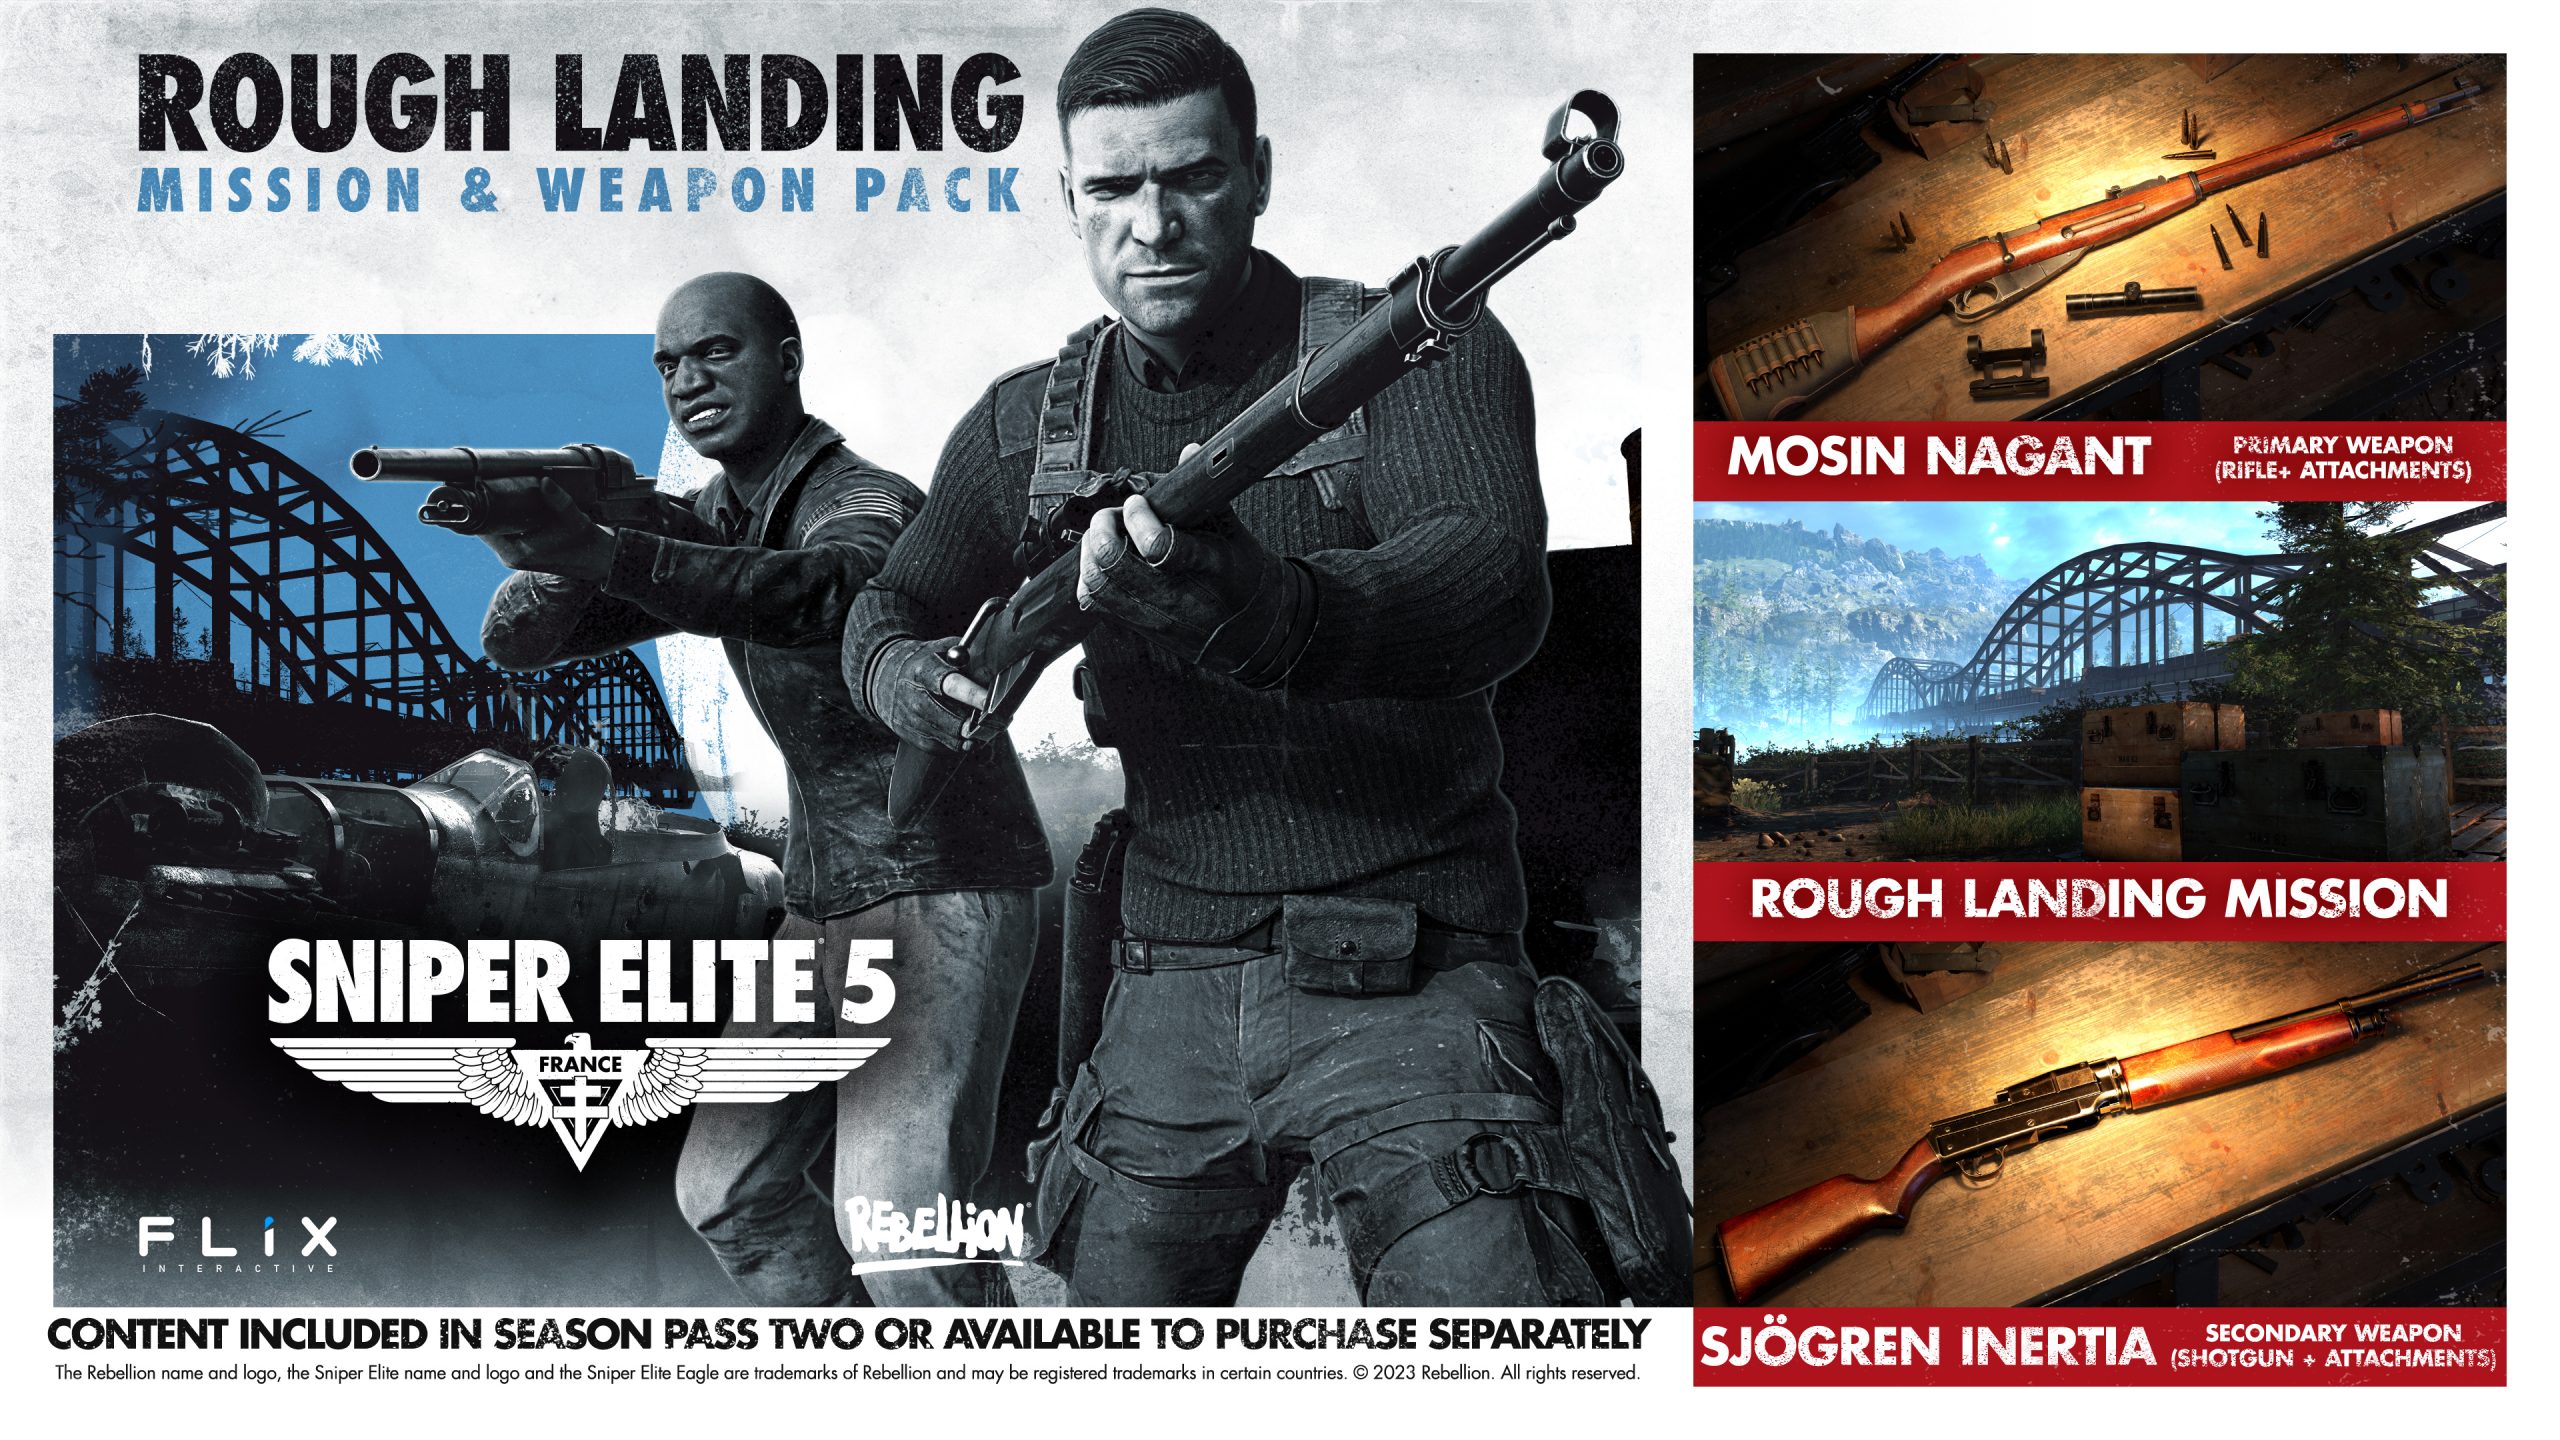 Sniper Elite 5 Rough Landing pack detailing contents such as Mosin Nagant rifle, Rough Landing mission and Sjogren Inertia weapon